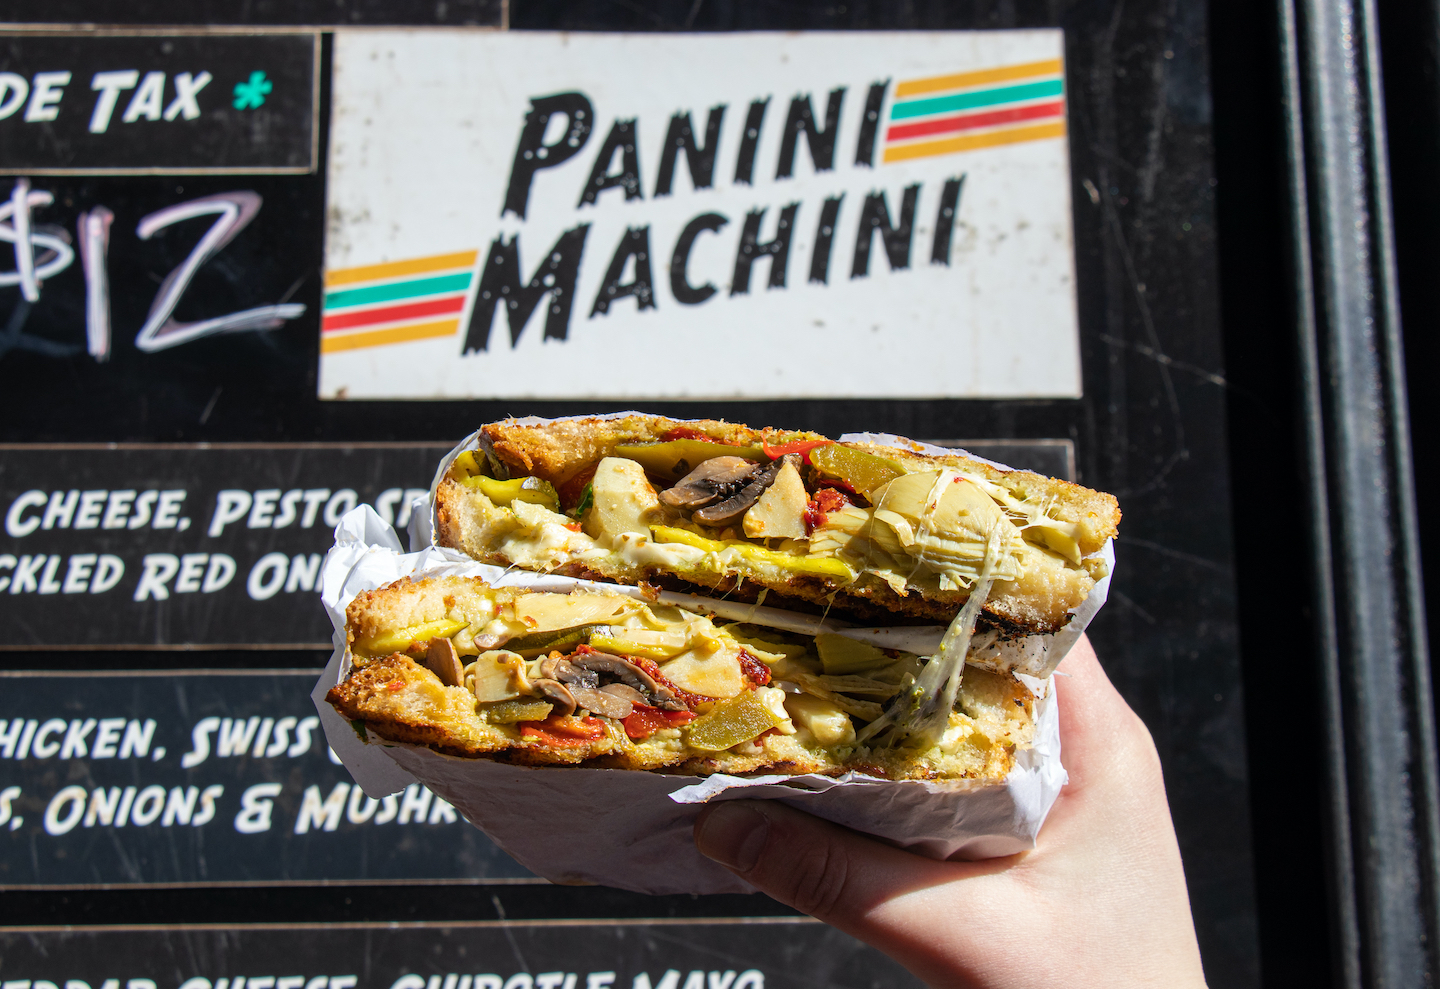 Panini sandwich from Panini Machini food truck.